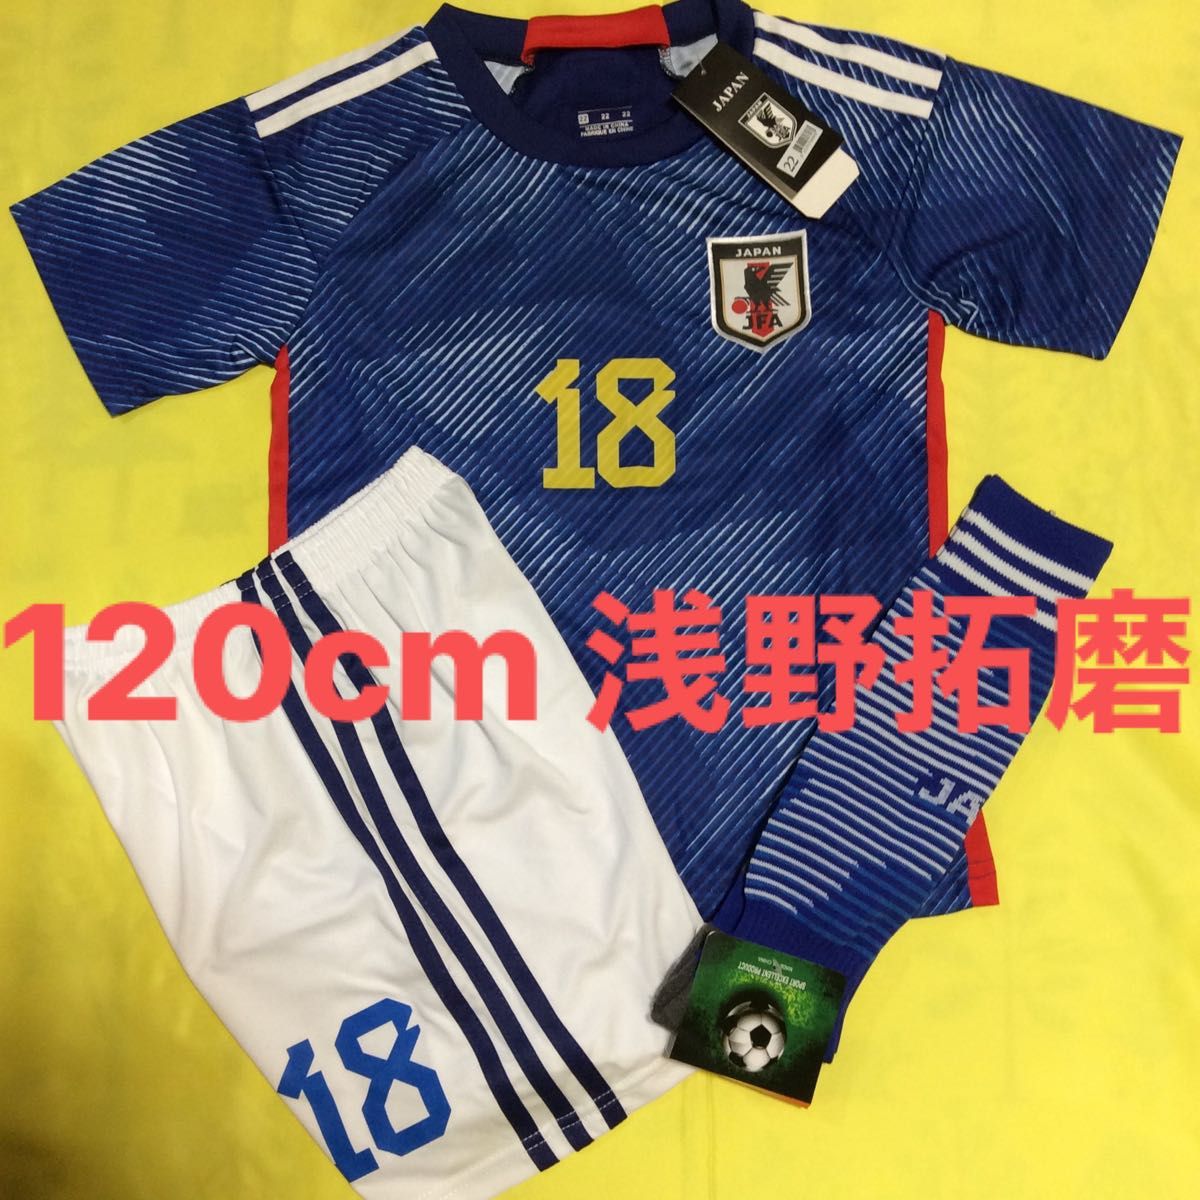 120cm 日本代表 浅野拓磨 子供サッカーユニフォーム ソックスセット キッズ